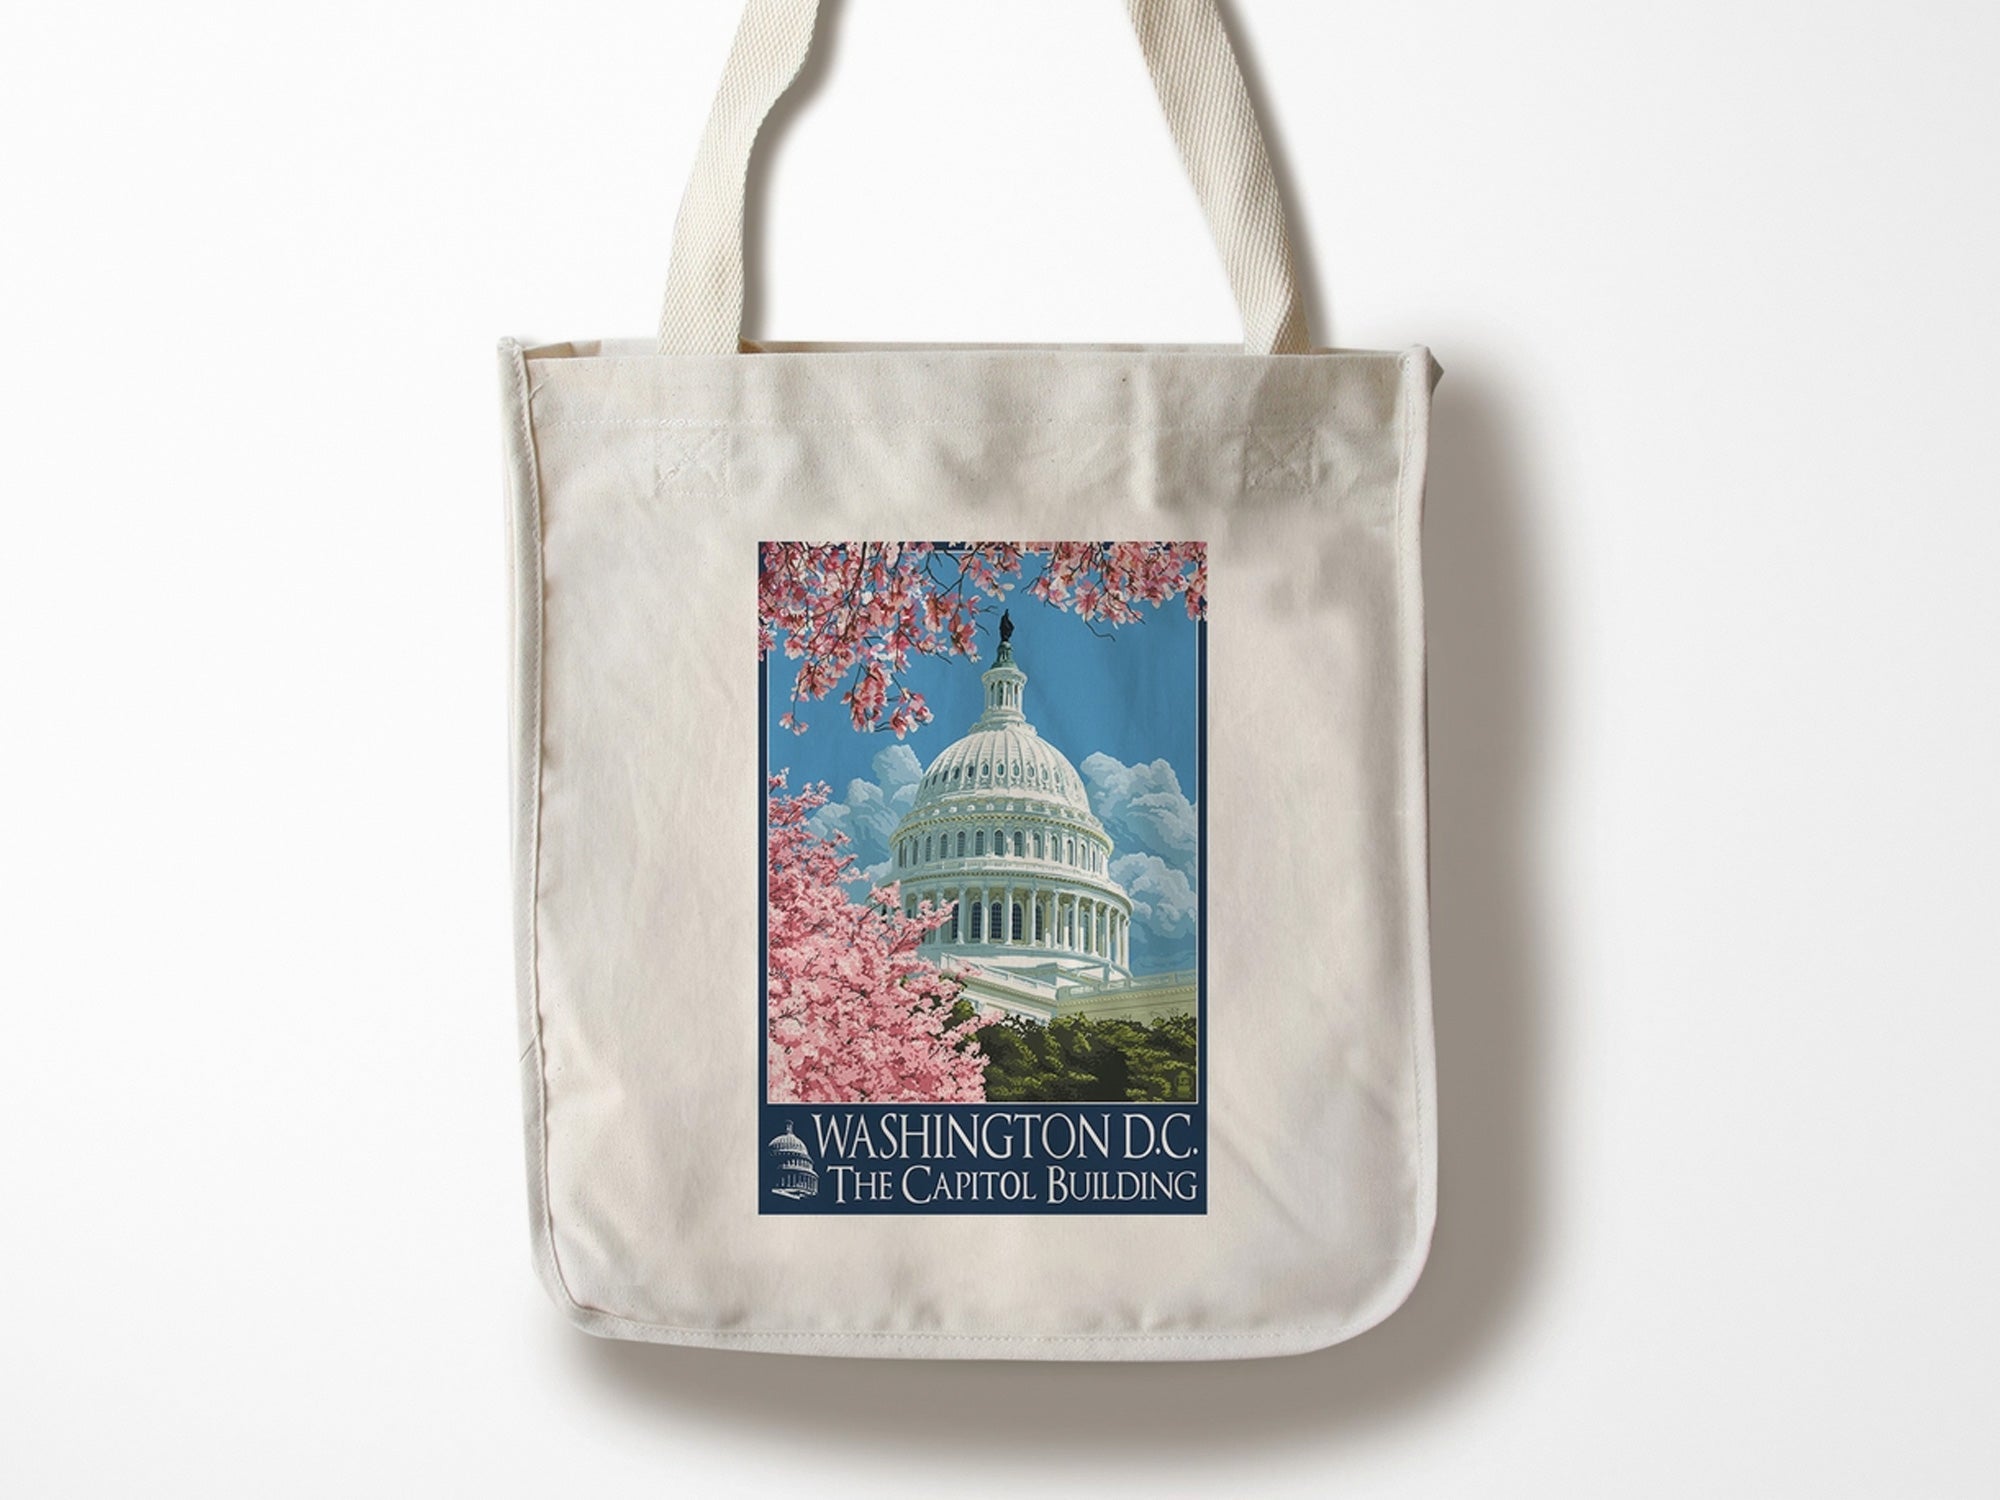 Cherry Blossoms Tote Bag